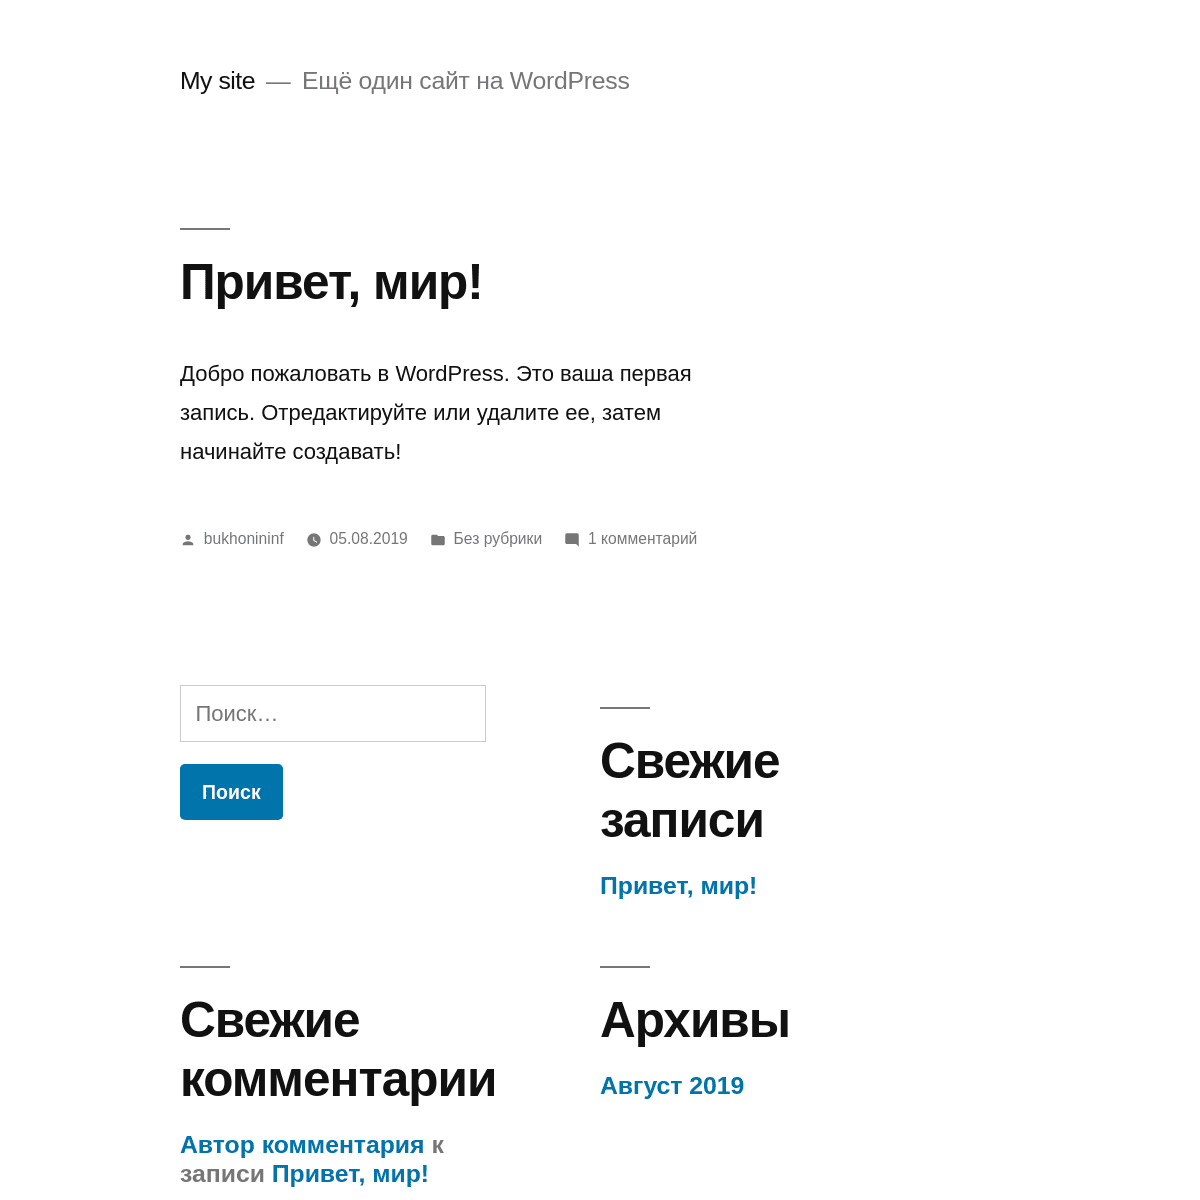 A complete backup of infobiznesman.ru